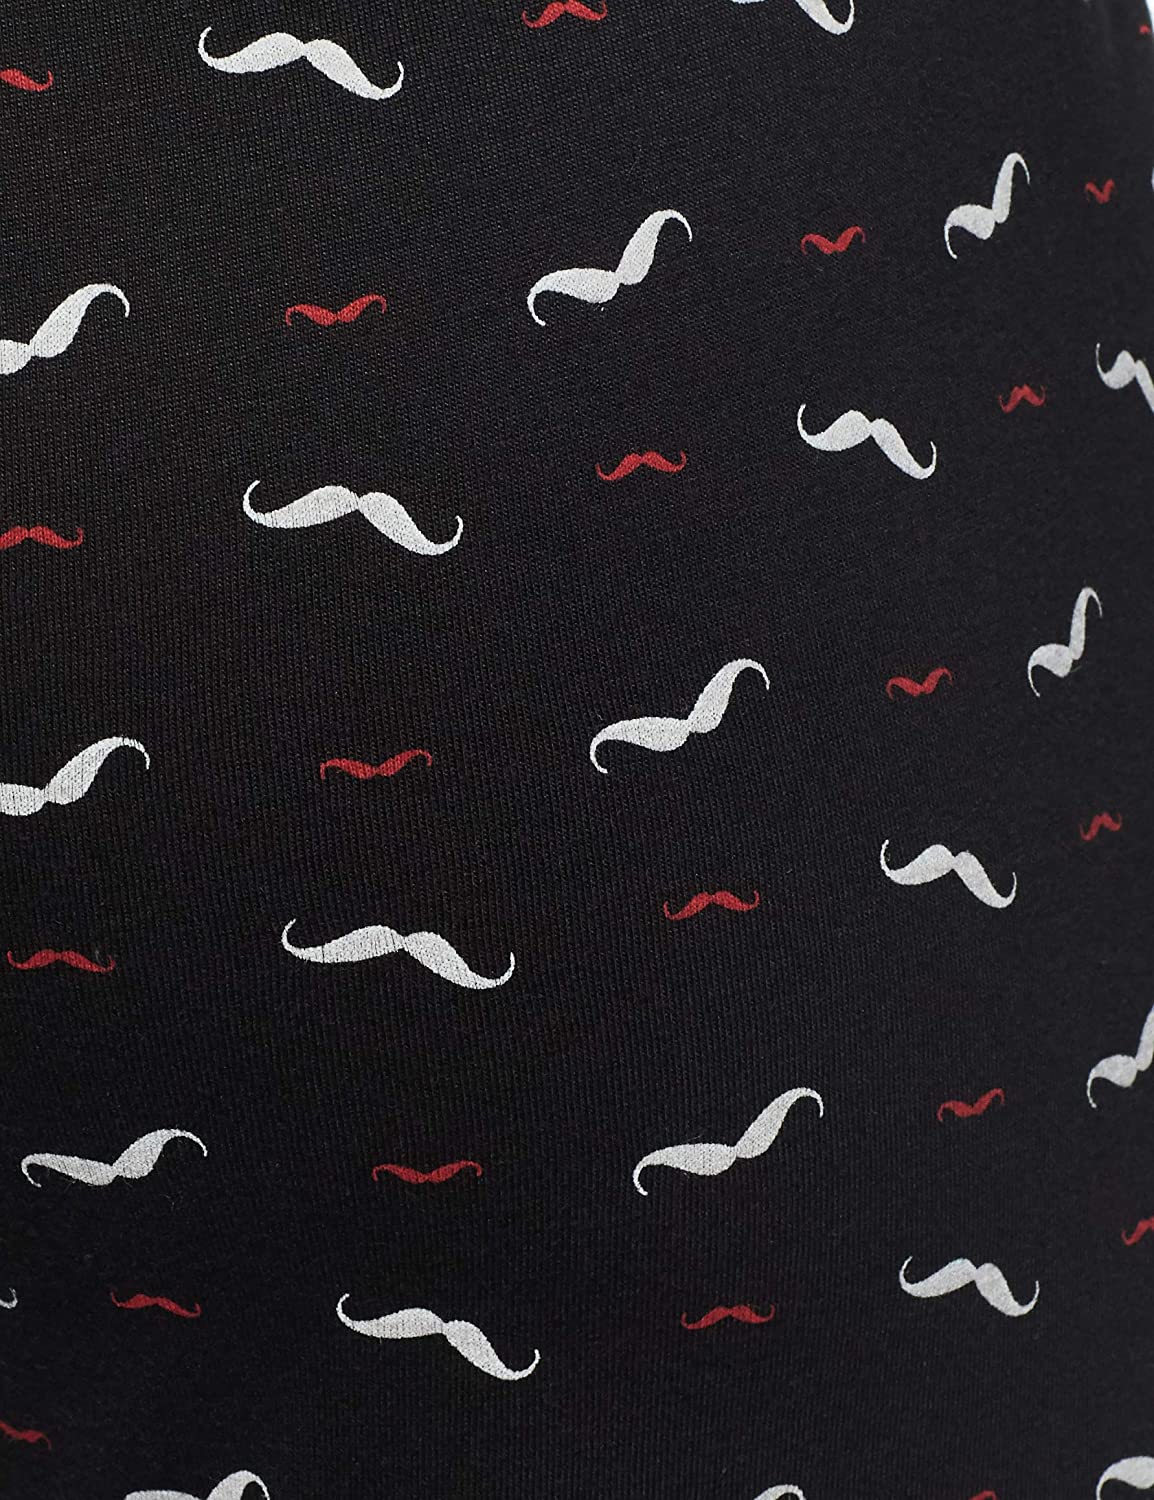 Van Heusen Athleisure Women's Printed Lounge Pant (Moustache)